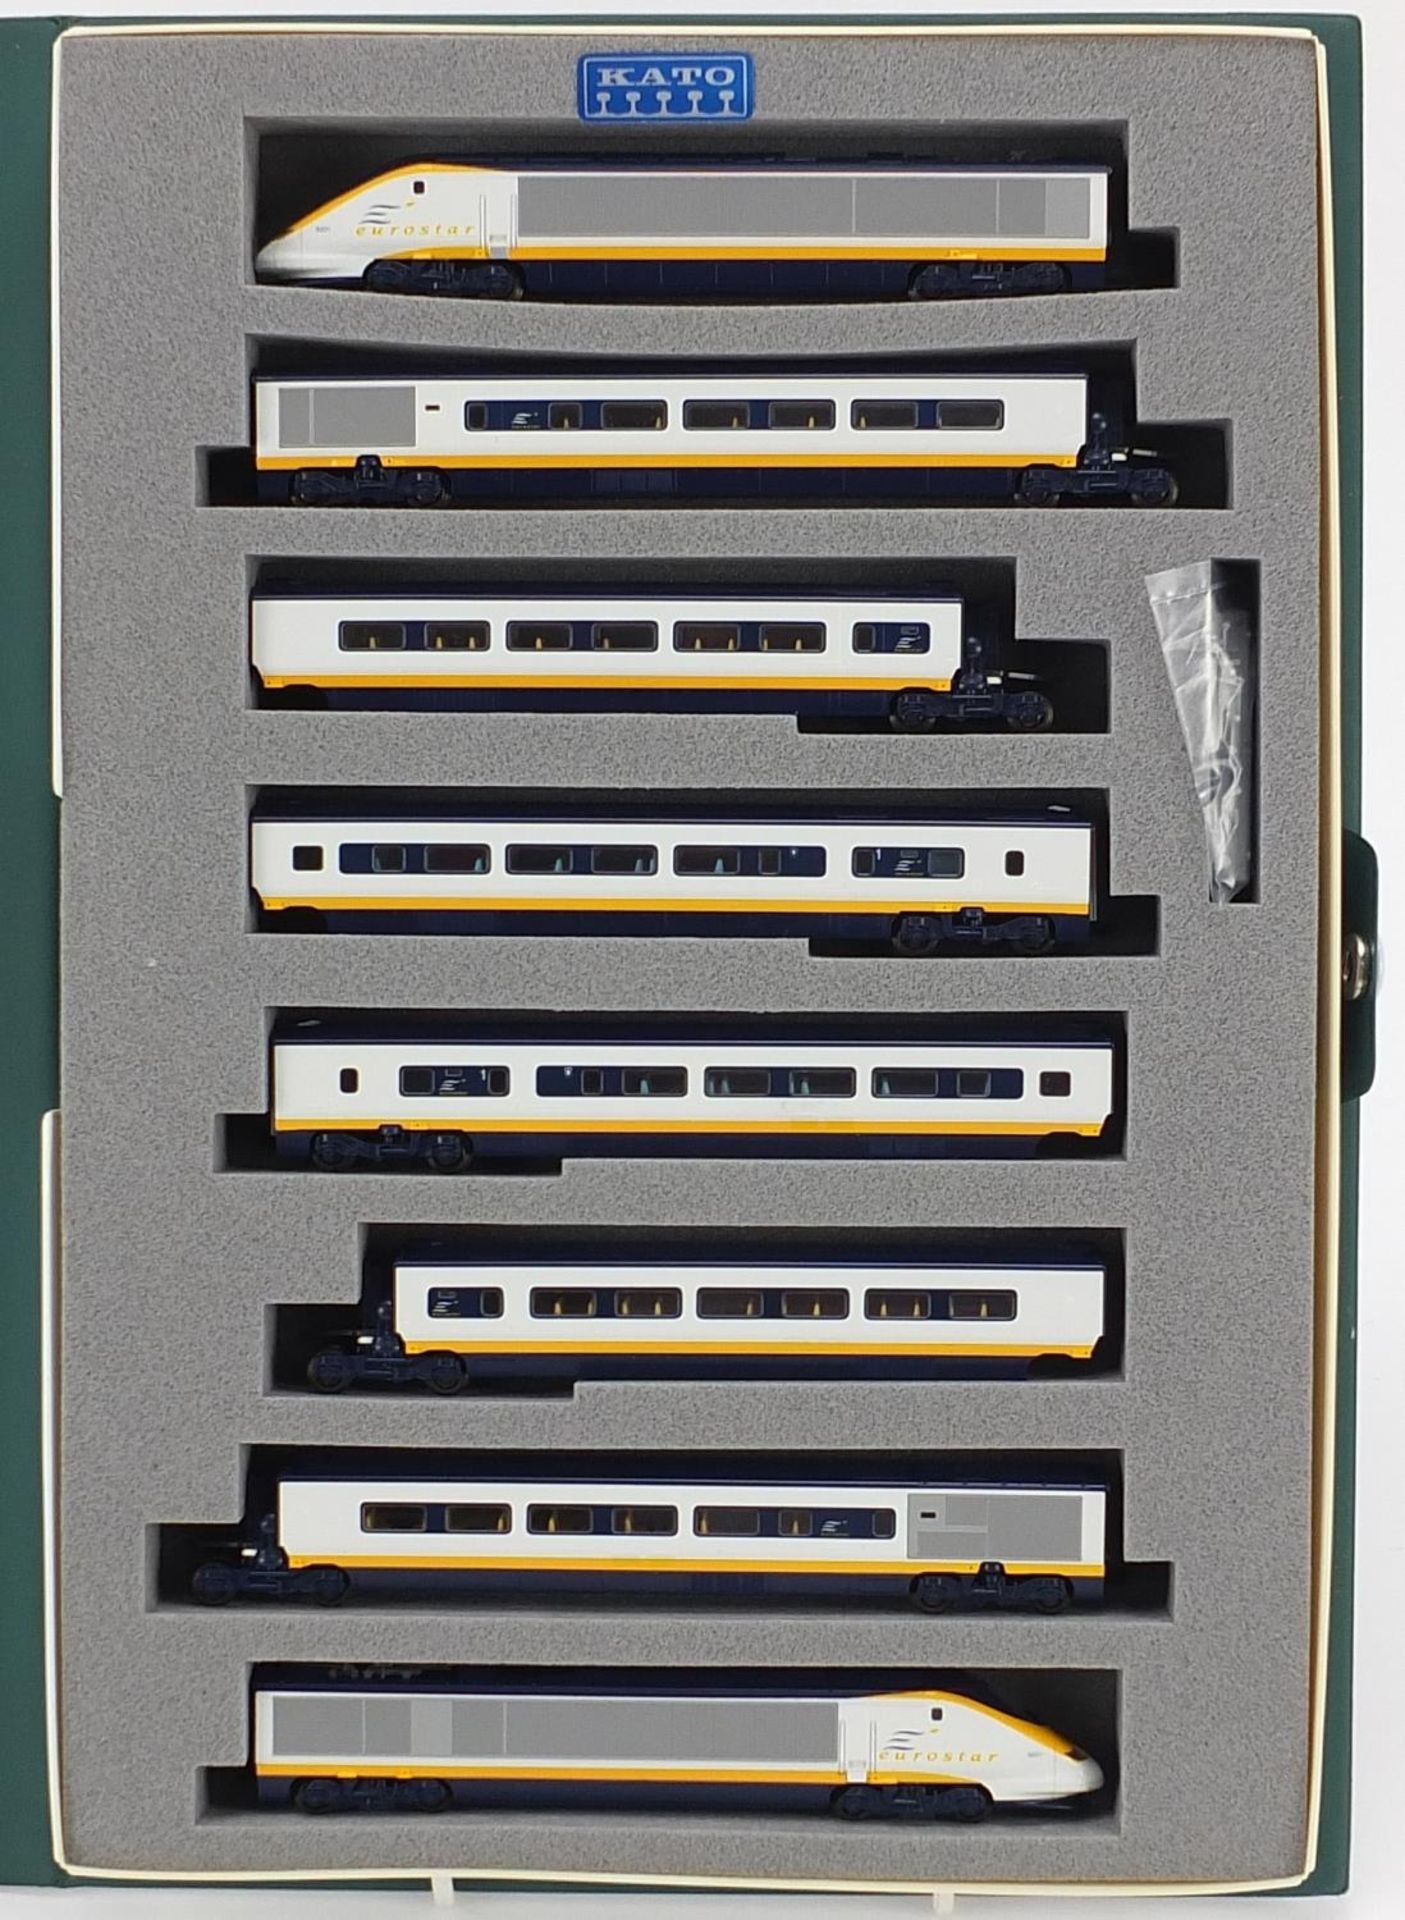 Kato N gauge model railway Eurostar eight car set with box, number 10-327